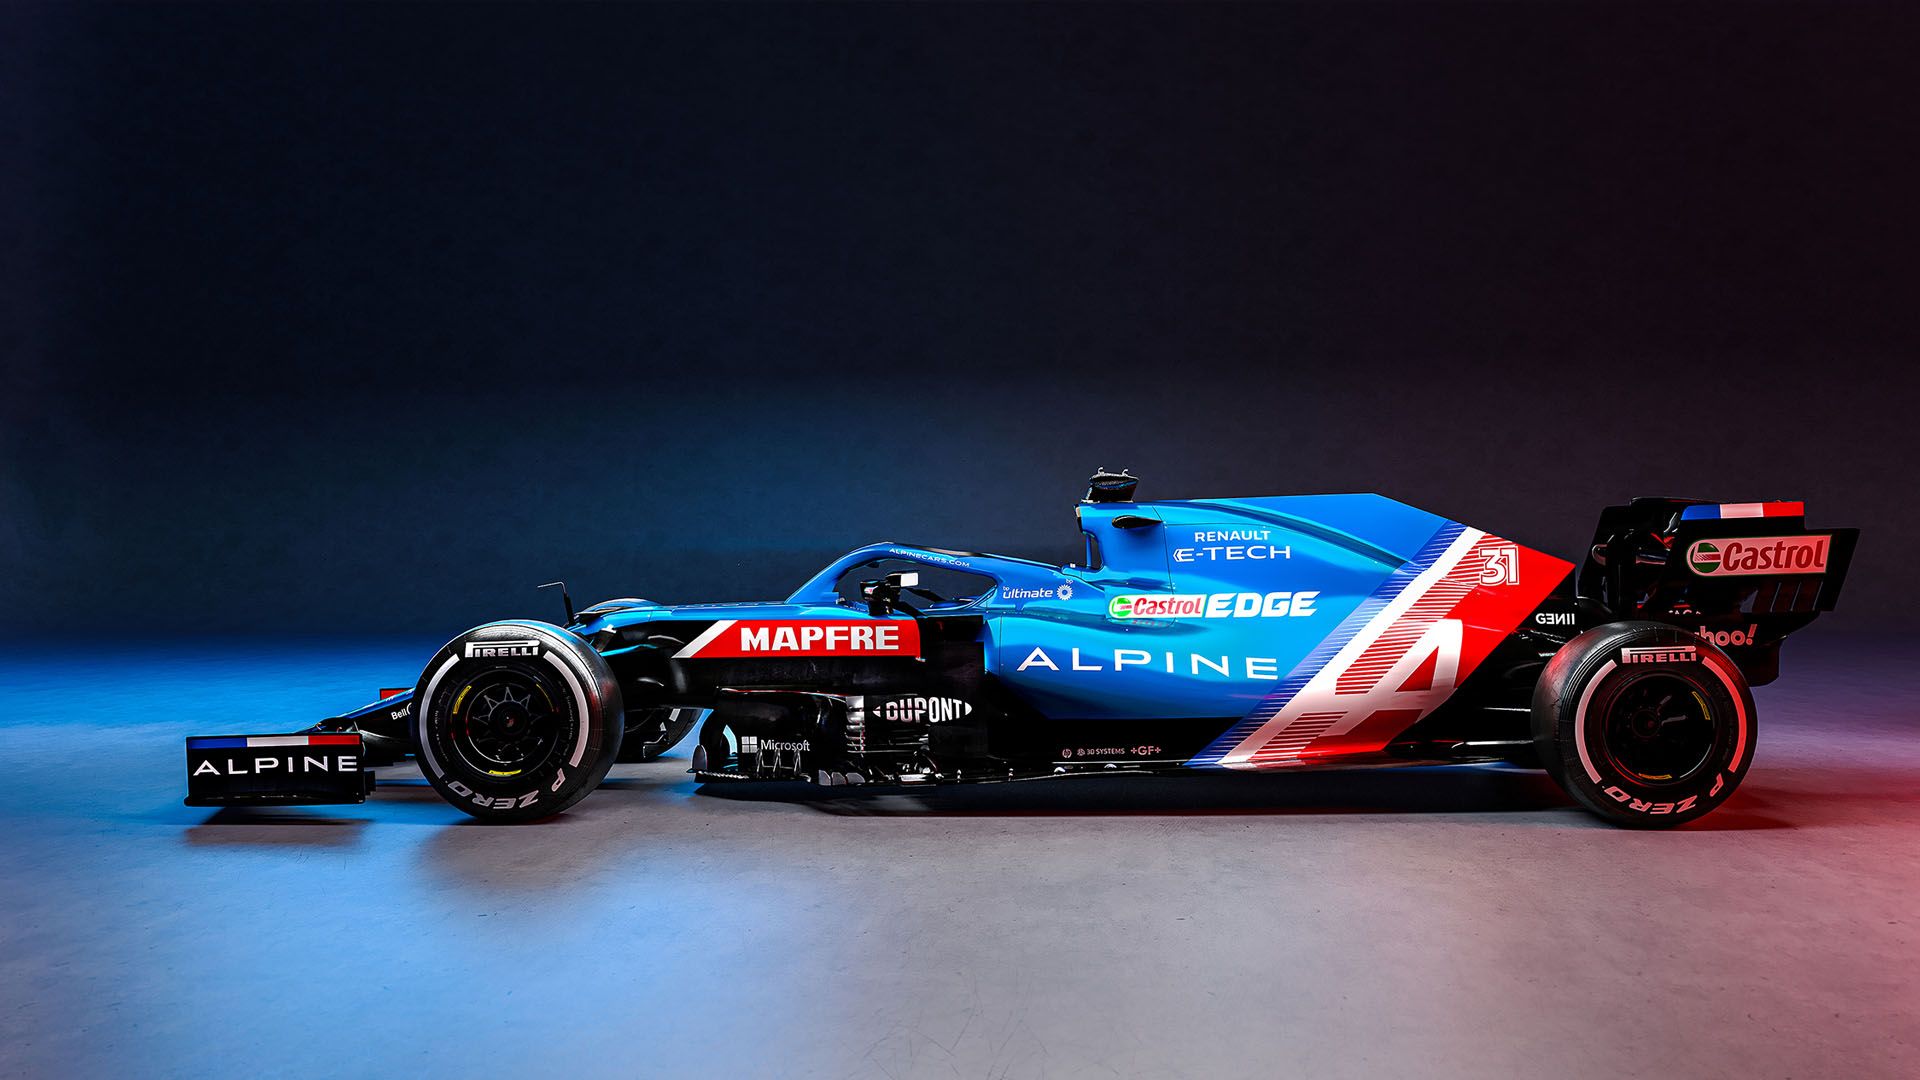 Alpine F1 for 2021